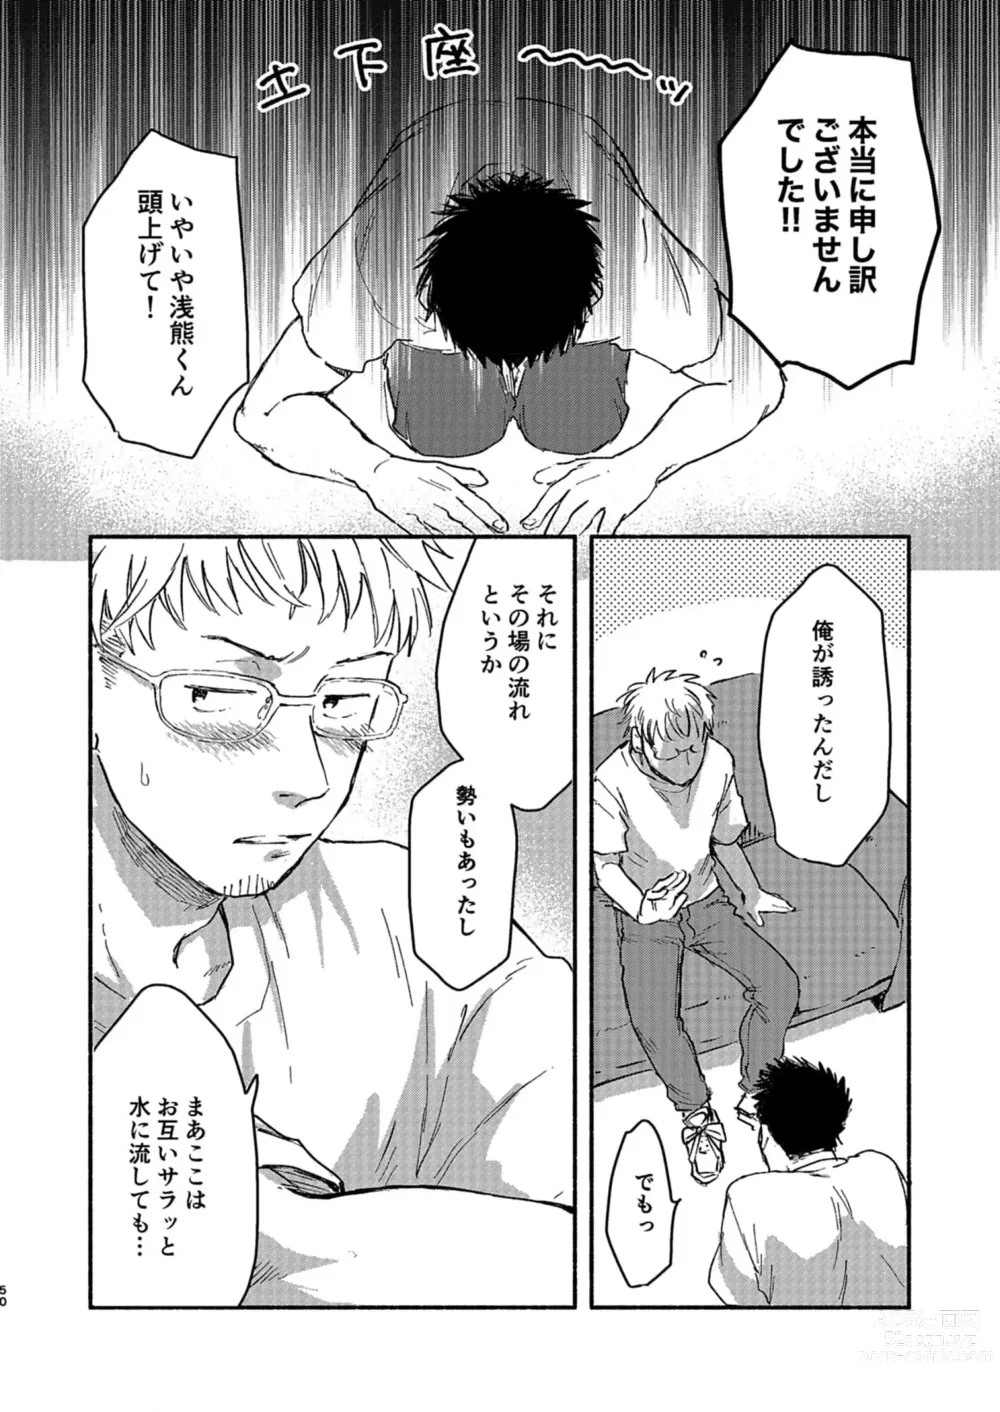 Page 50 of doujinshi Toaru GayVi Seisaku Gaisha Staff no Shanai Renai Jijou - The internal love affairs of the staff of a certain gay video production company.